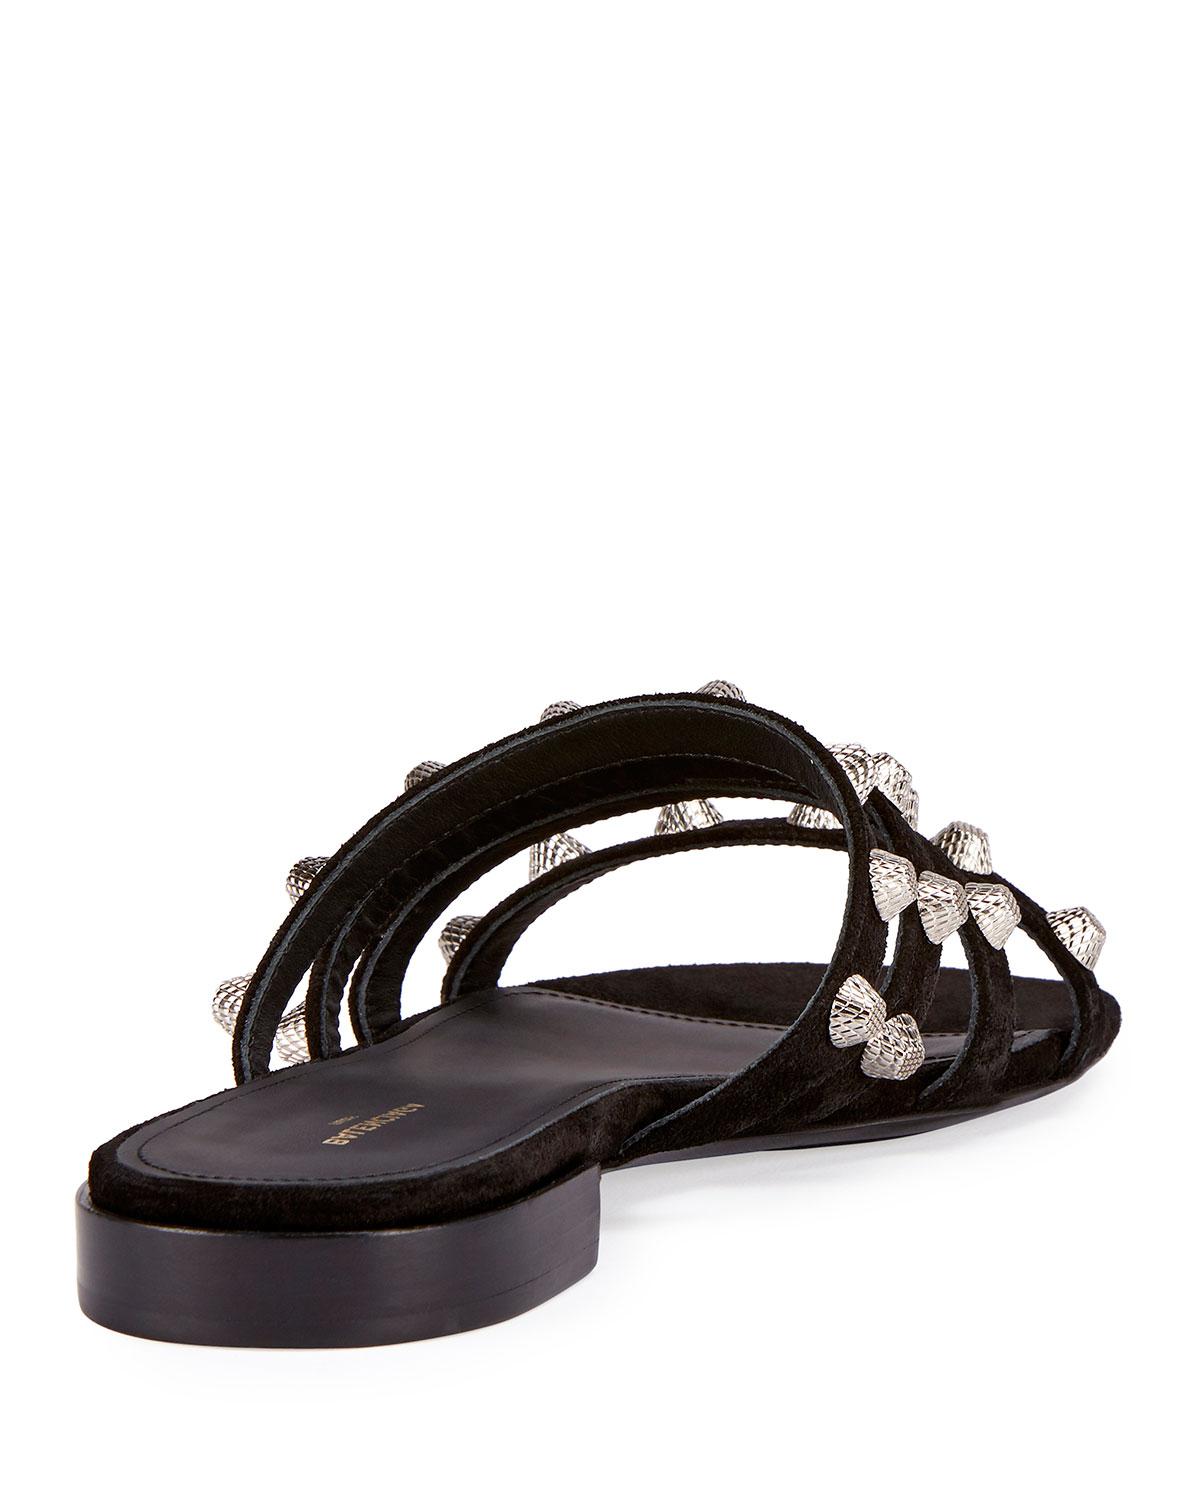 Lyst - Balenciaga Studded Suede Slide Flat Sandal in Black